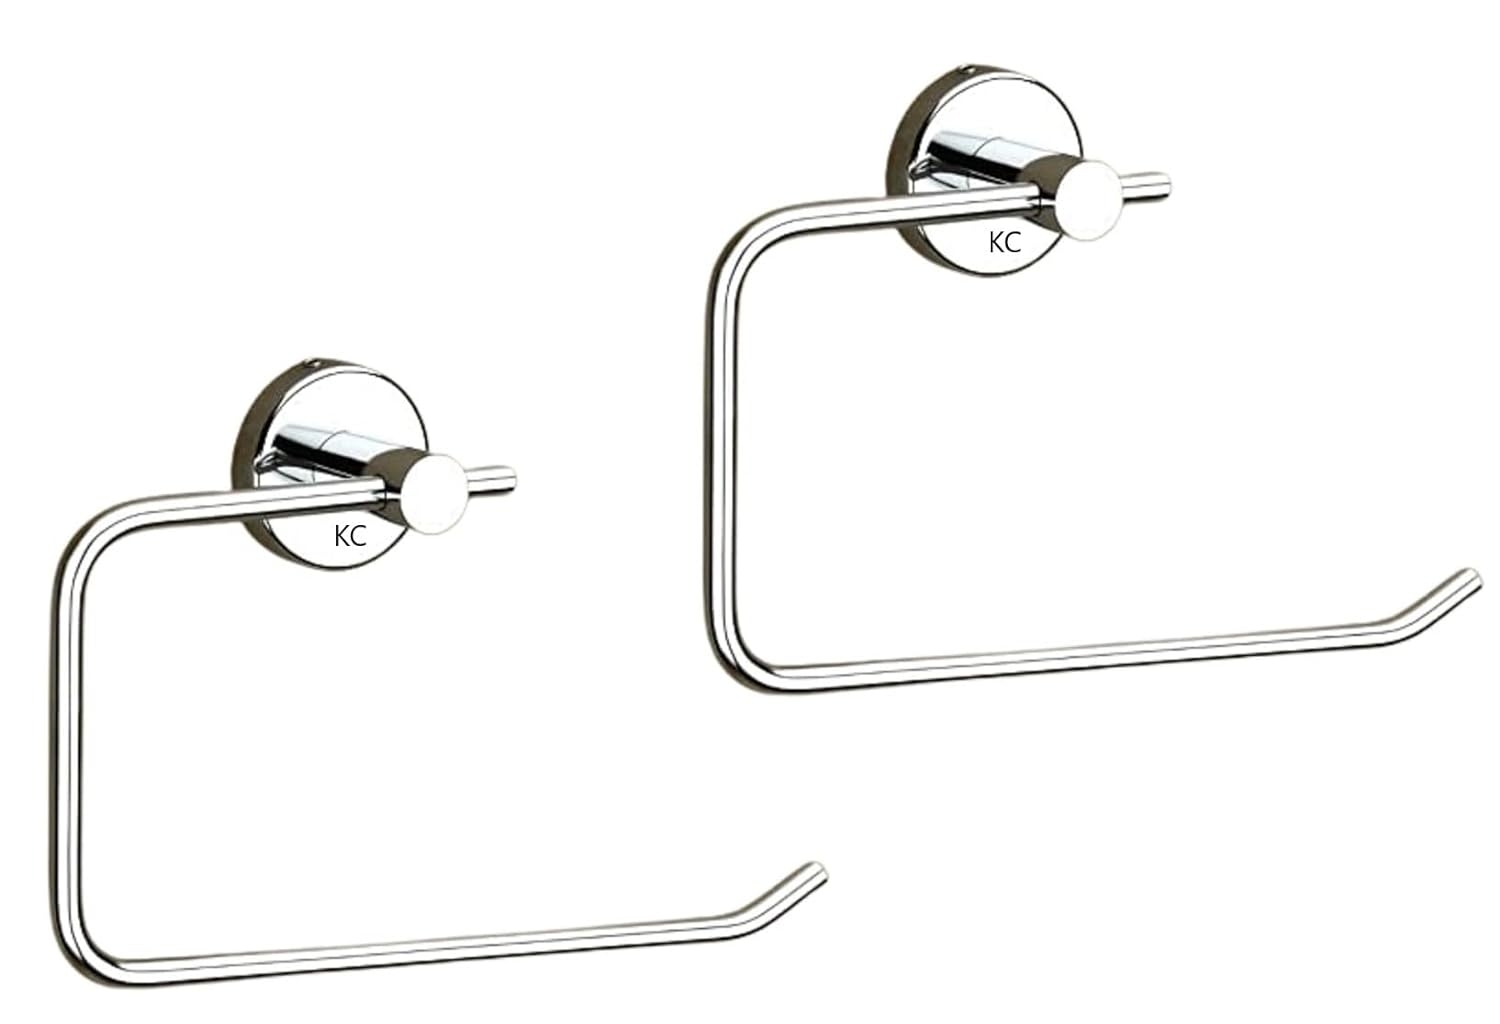 L-Shape Stainless Steel Towel Ring for Wash Basin/Bathroom/Napkin-Towel Hanger - 2 pcs (Chrome)